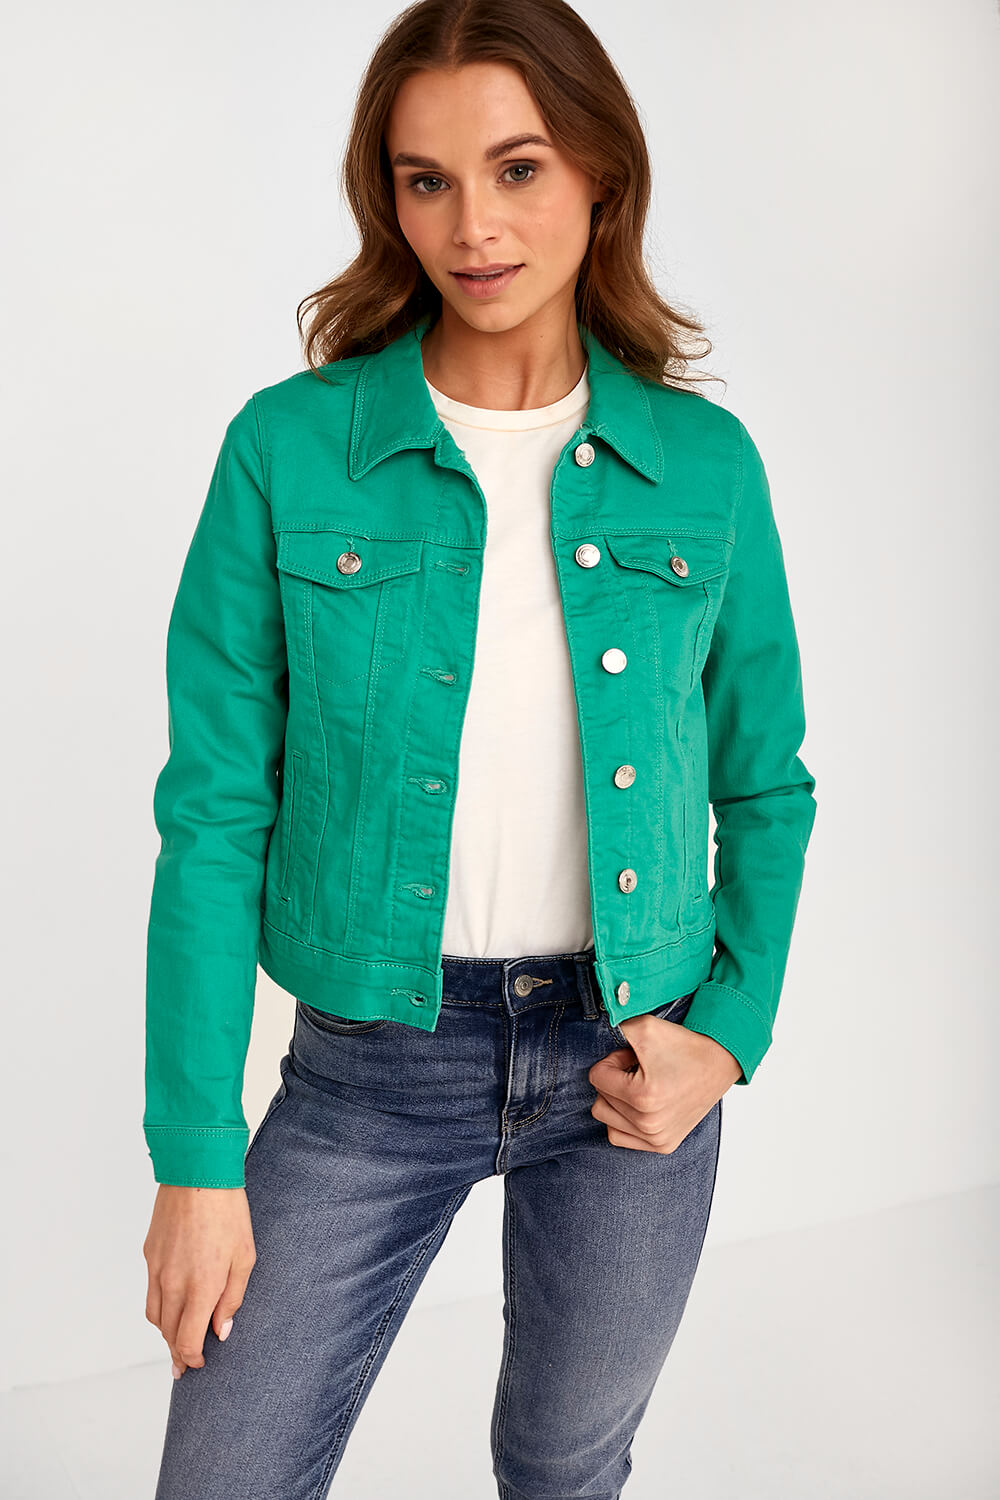 Vero Moda Hot Soya Denim Jacket in Green iCLOTHING - iCLOTHING